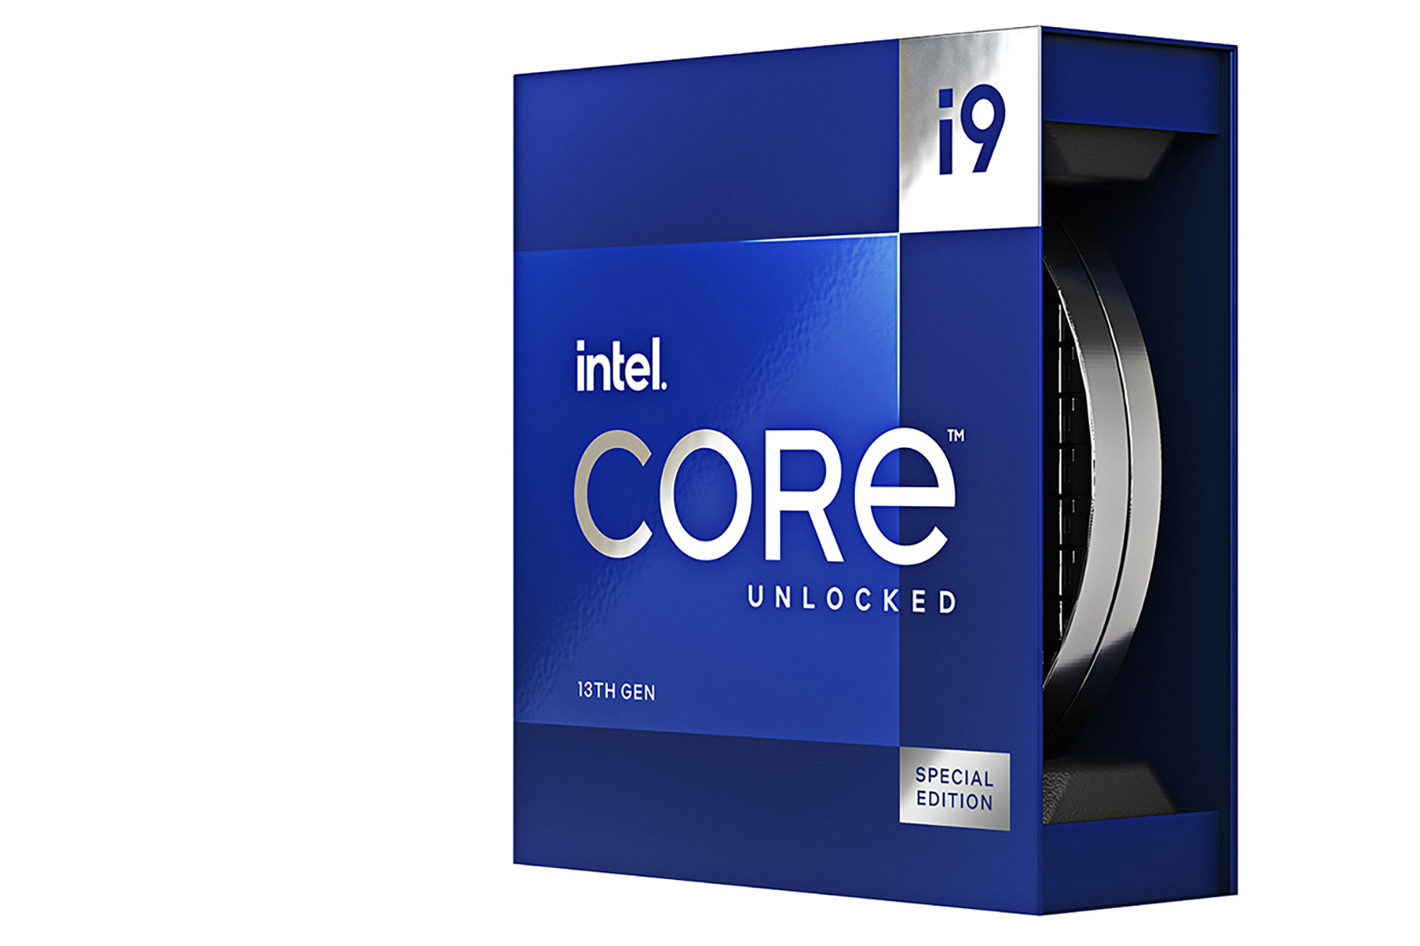 Intel Core i9-13900KS, the world's fastest desktop processor by Jose  Antunes - ProVideo Coalition